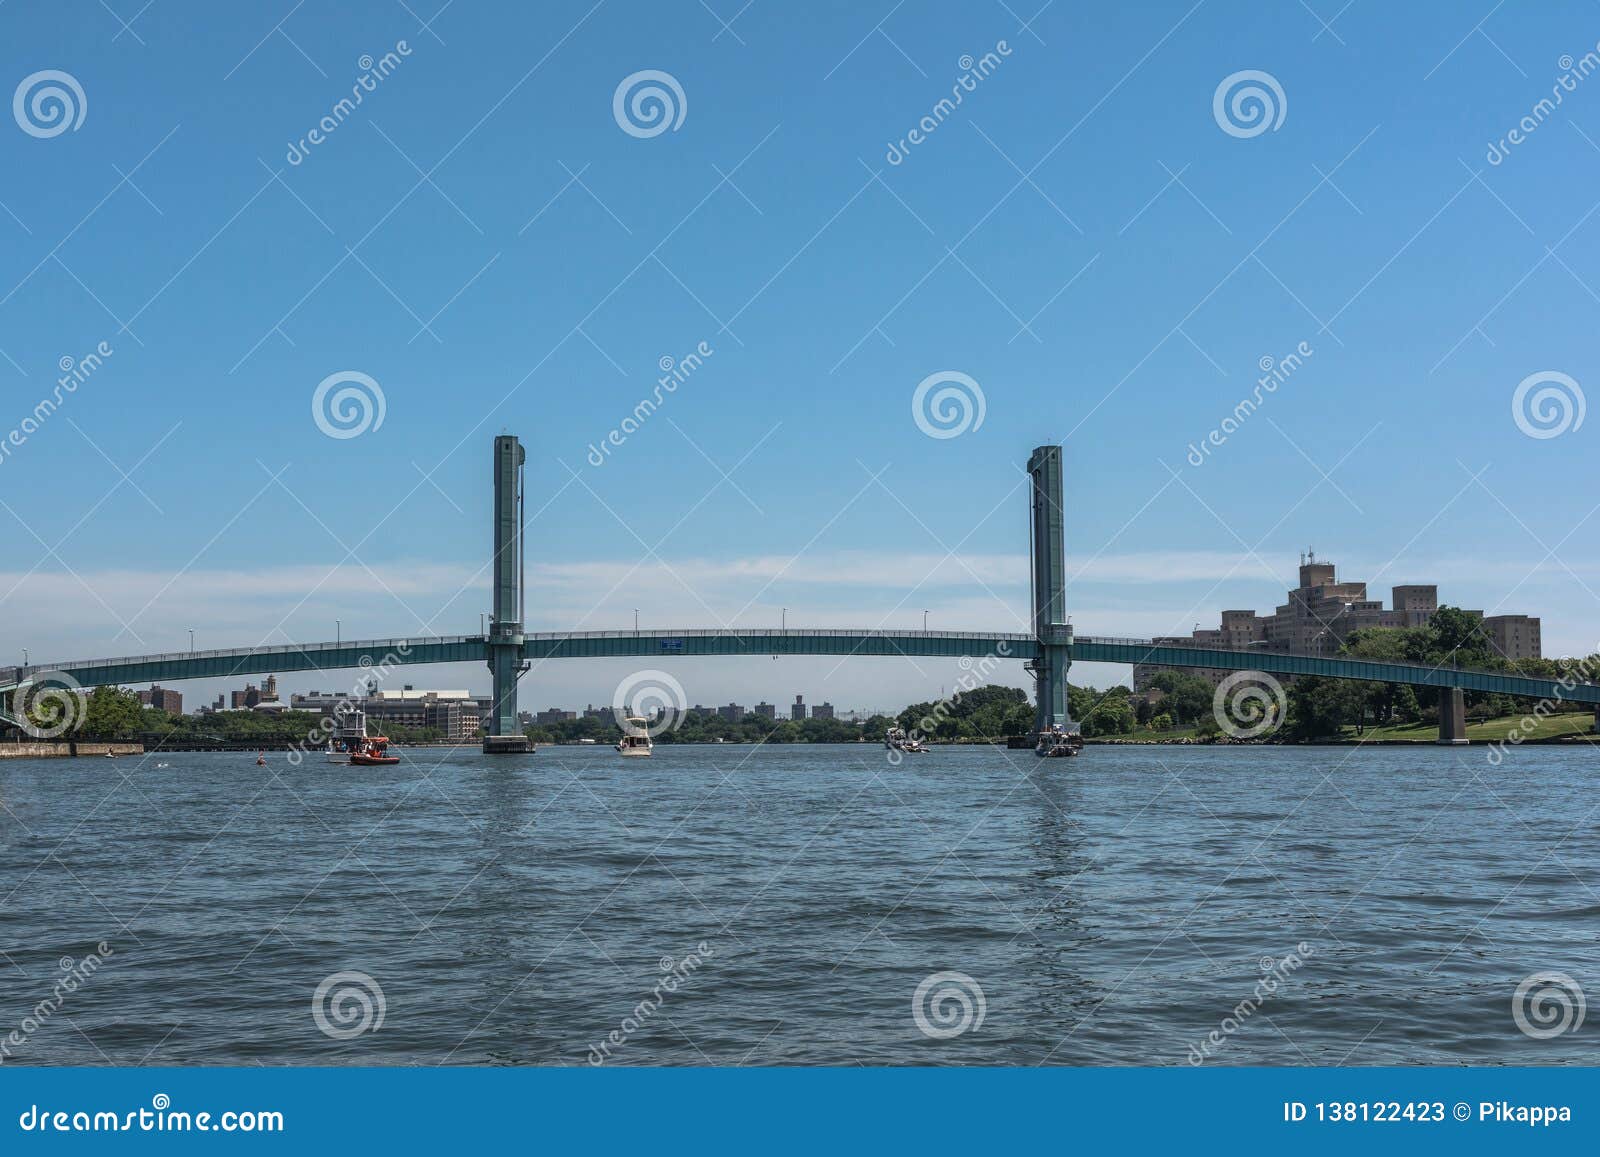 wards island bridge over the harlem river, nyc